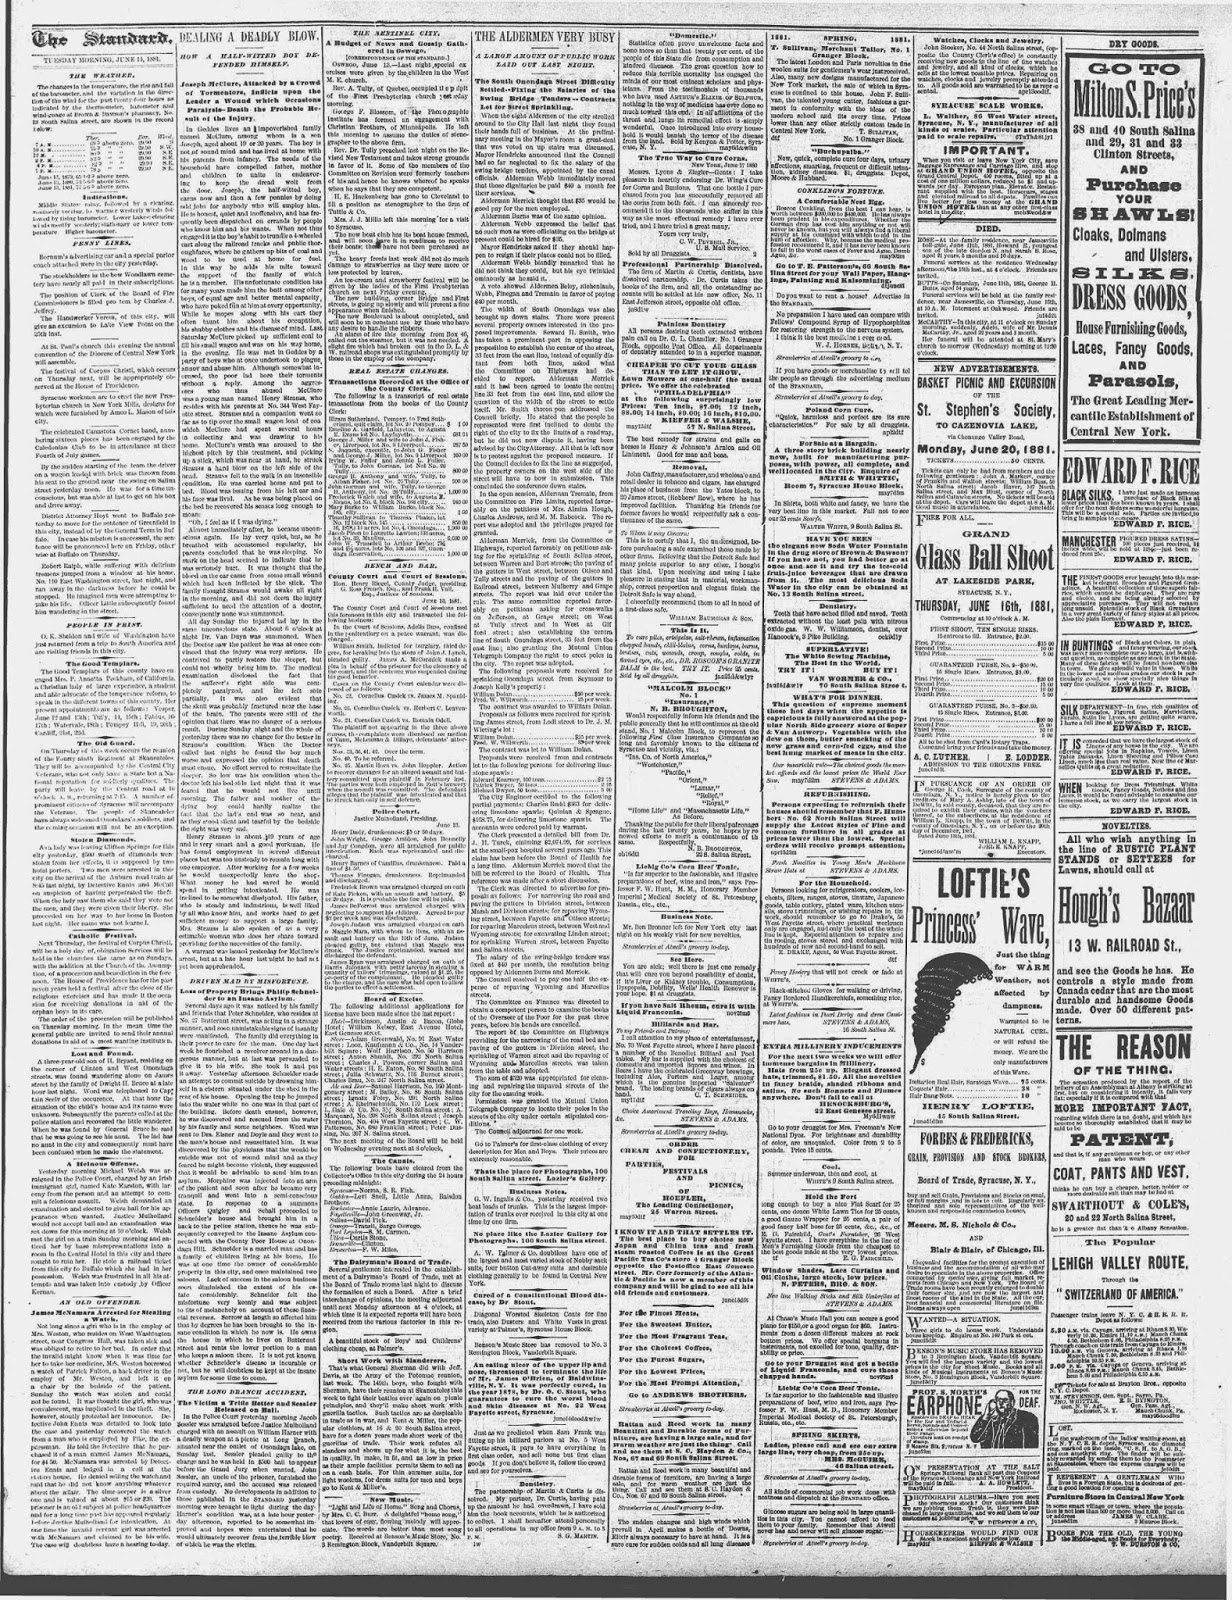 Climbing My Family Tree:  Strauss-McClure fight The Syracuse Standard, June 14, 1881